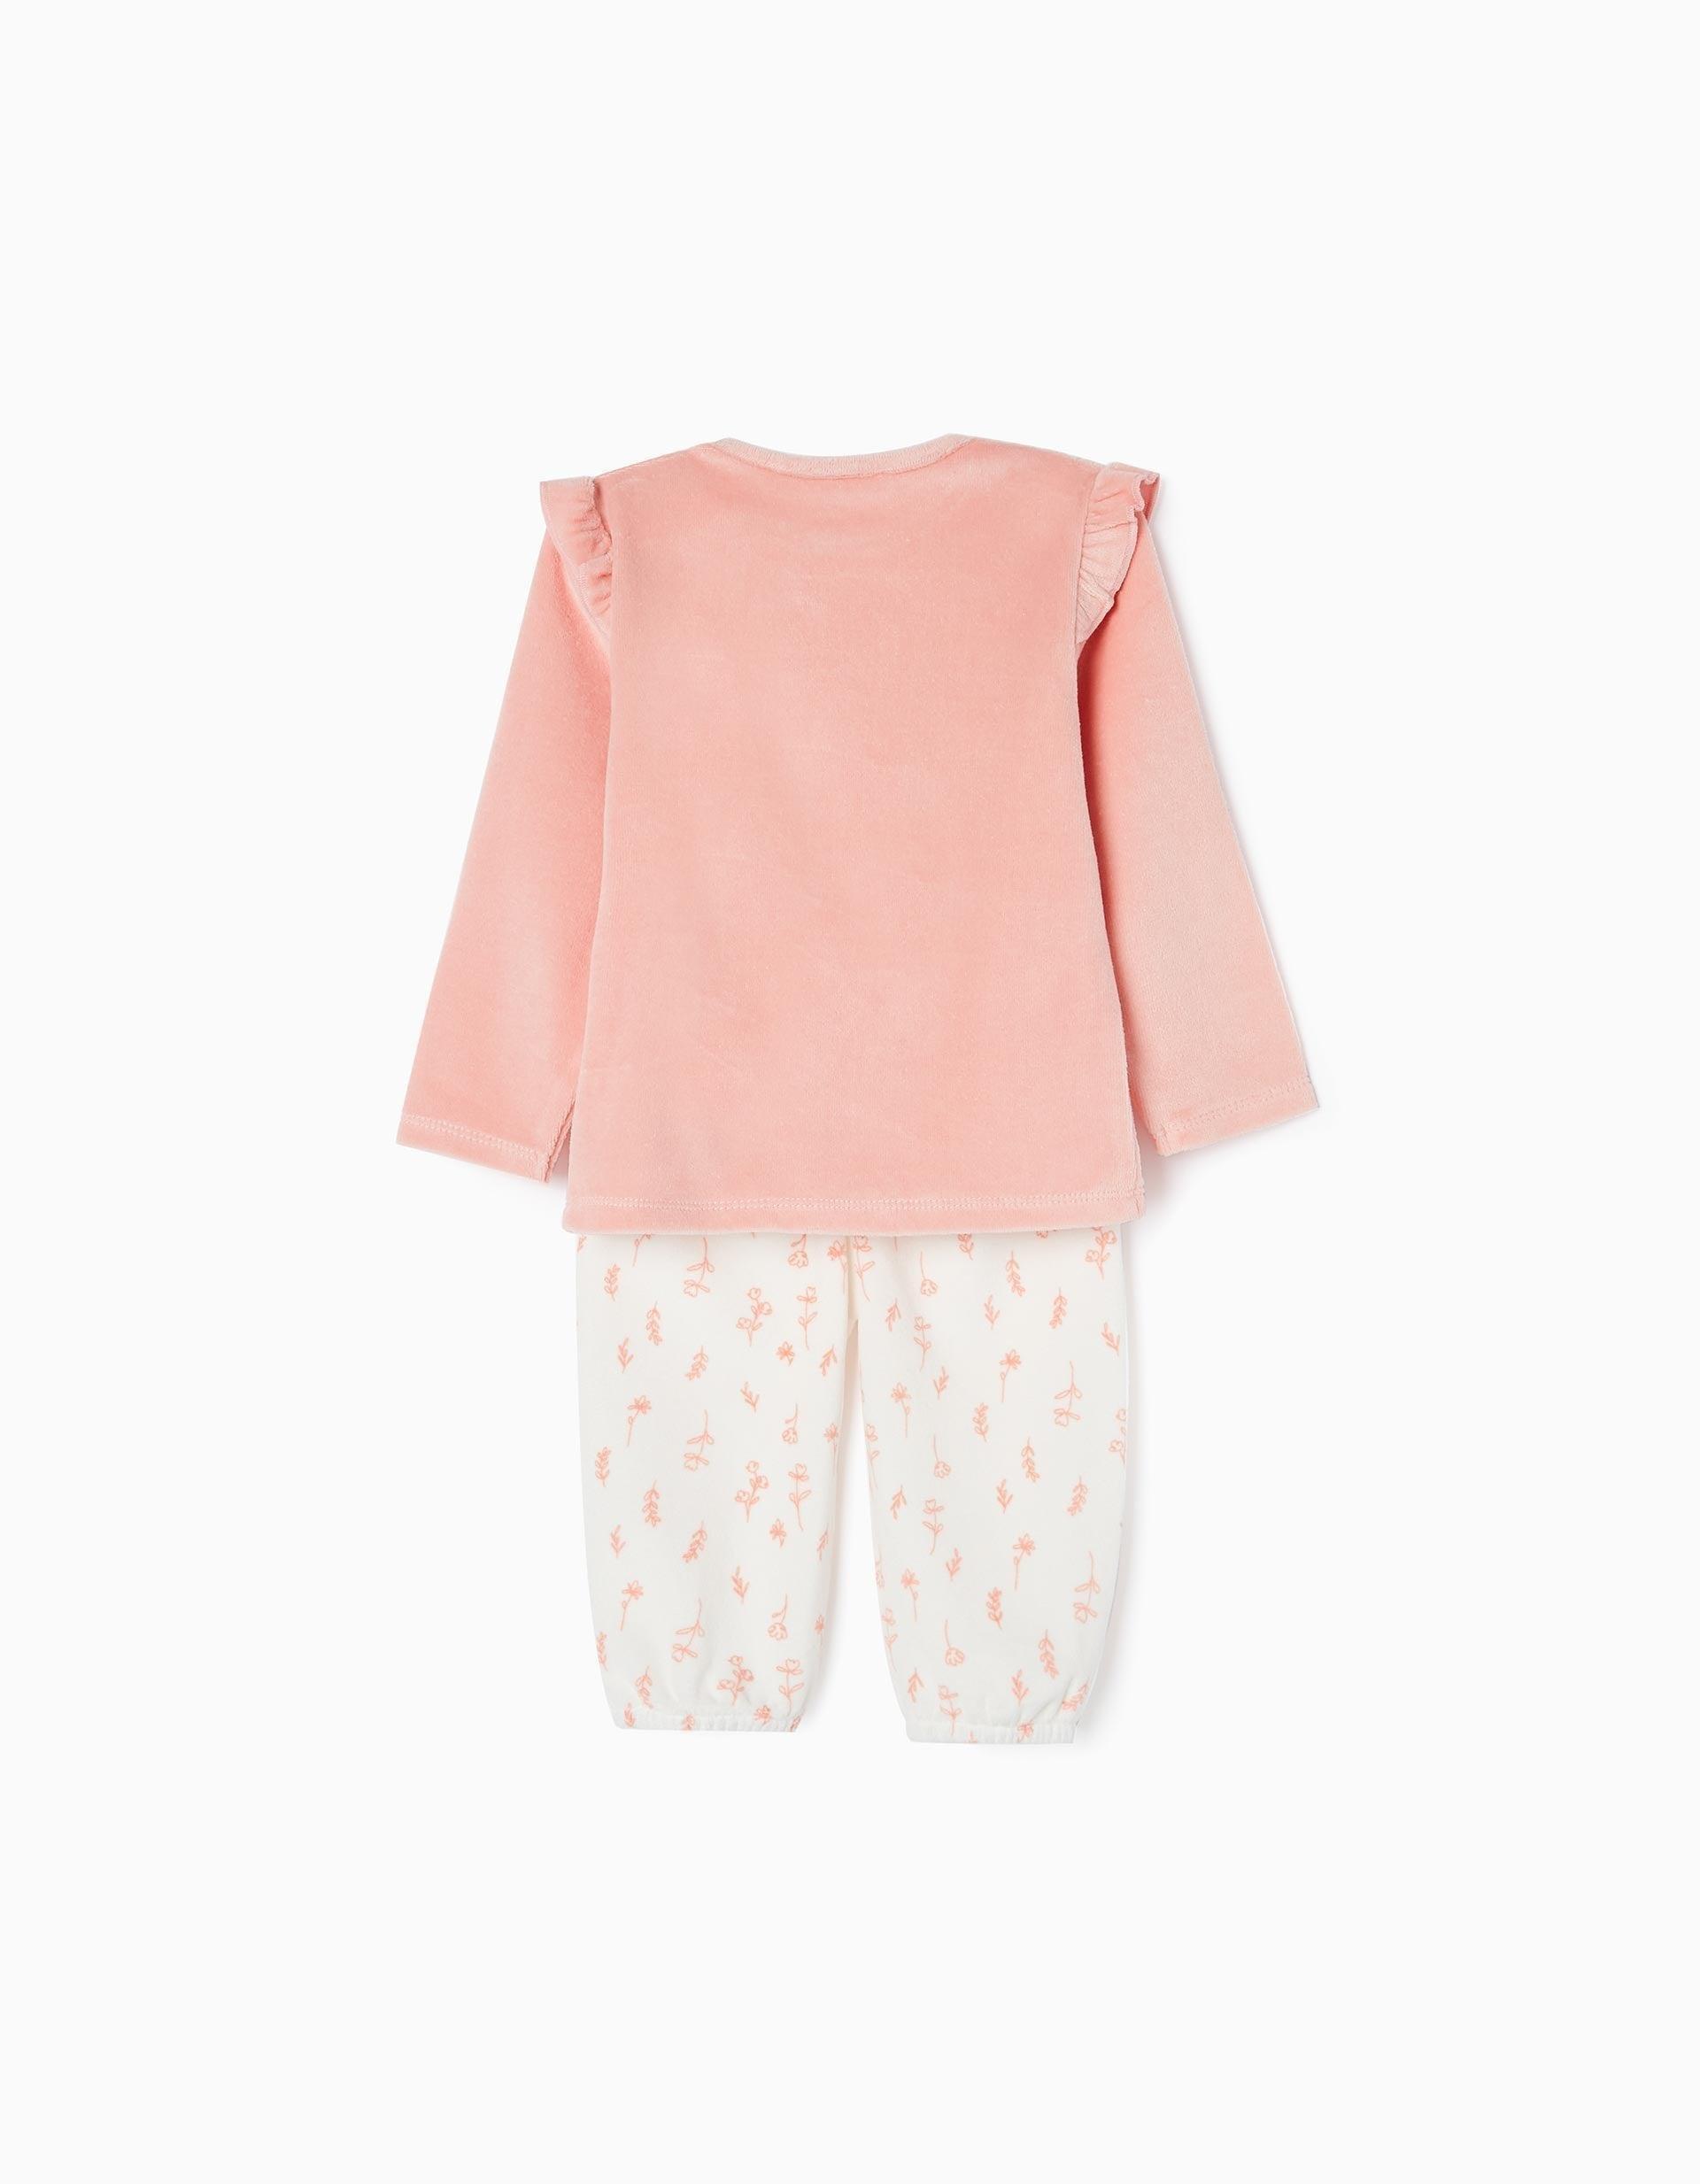 Zippy - Pink Velour Pyjamas, Baby Girls